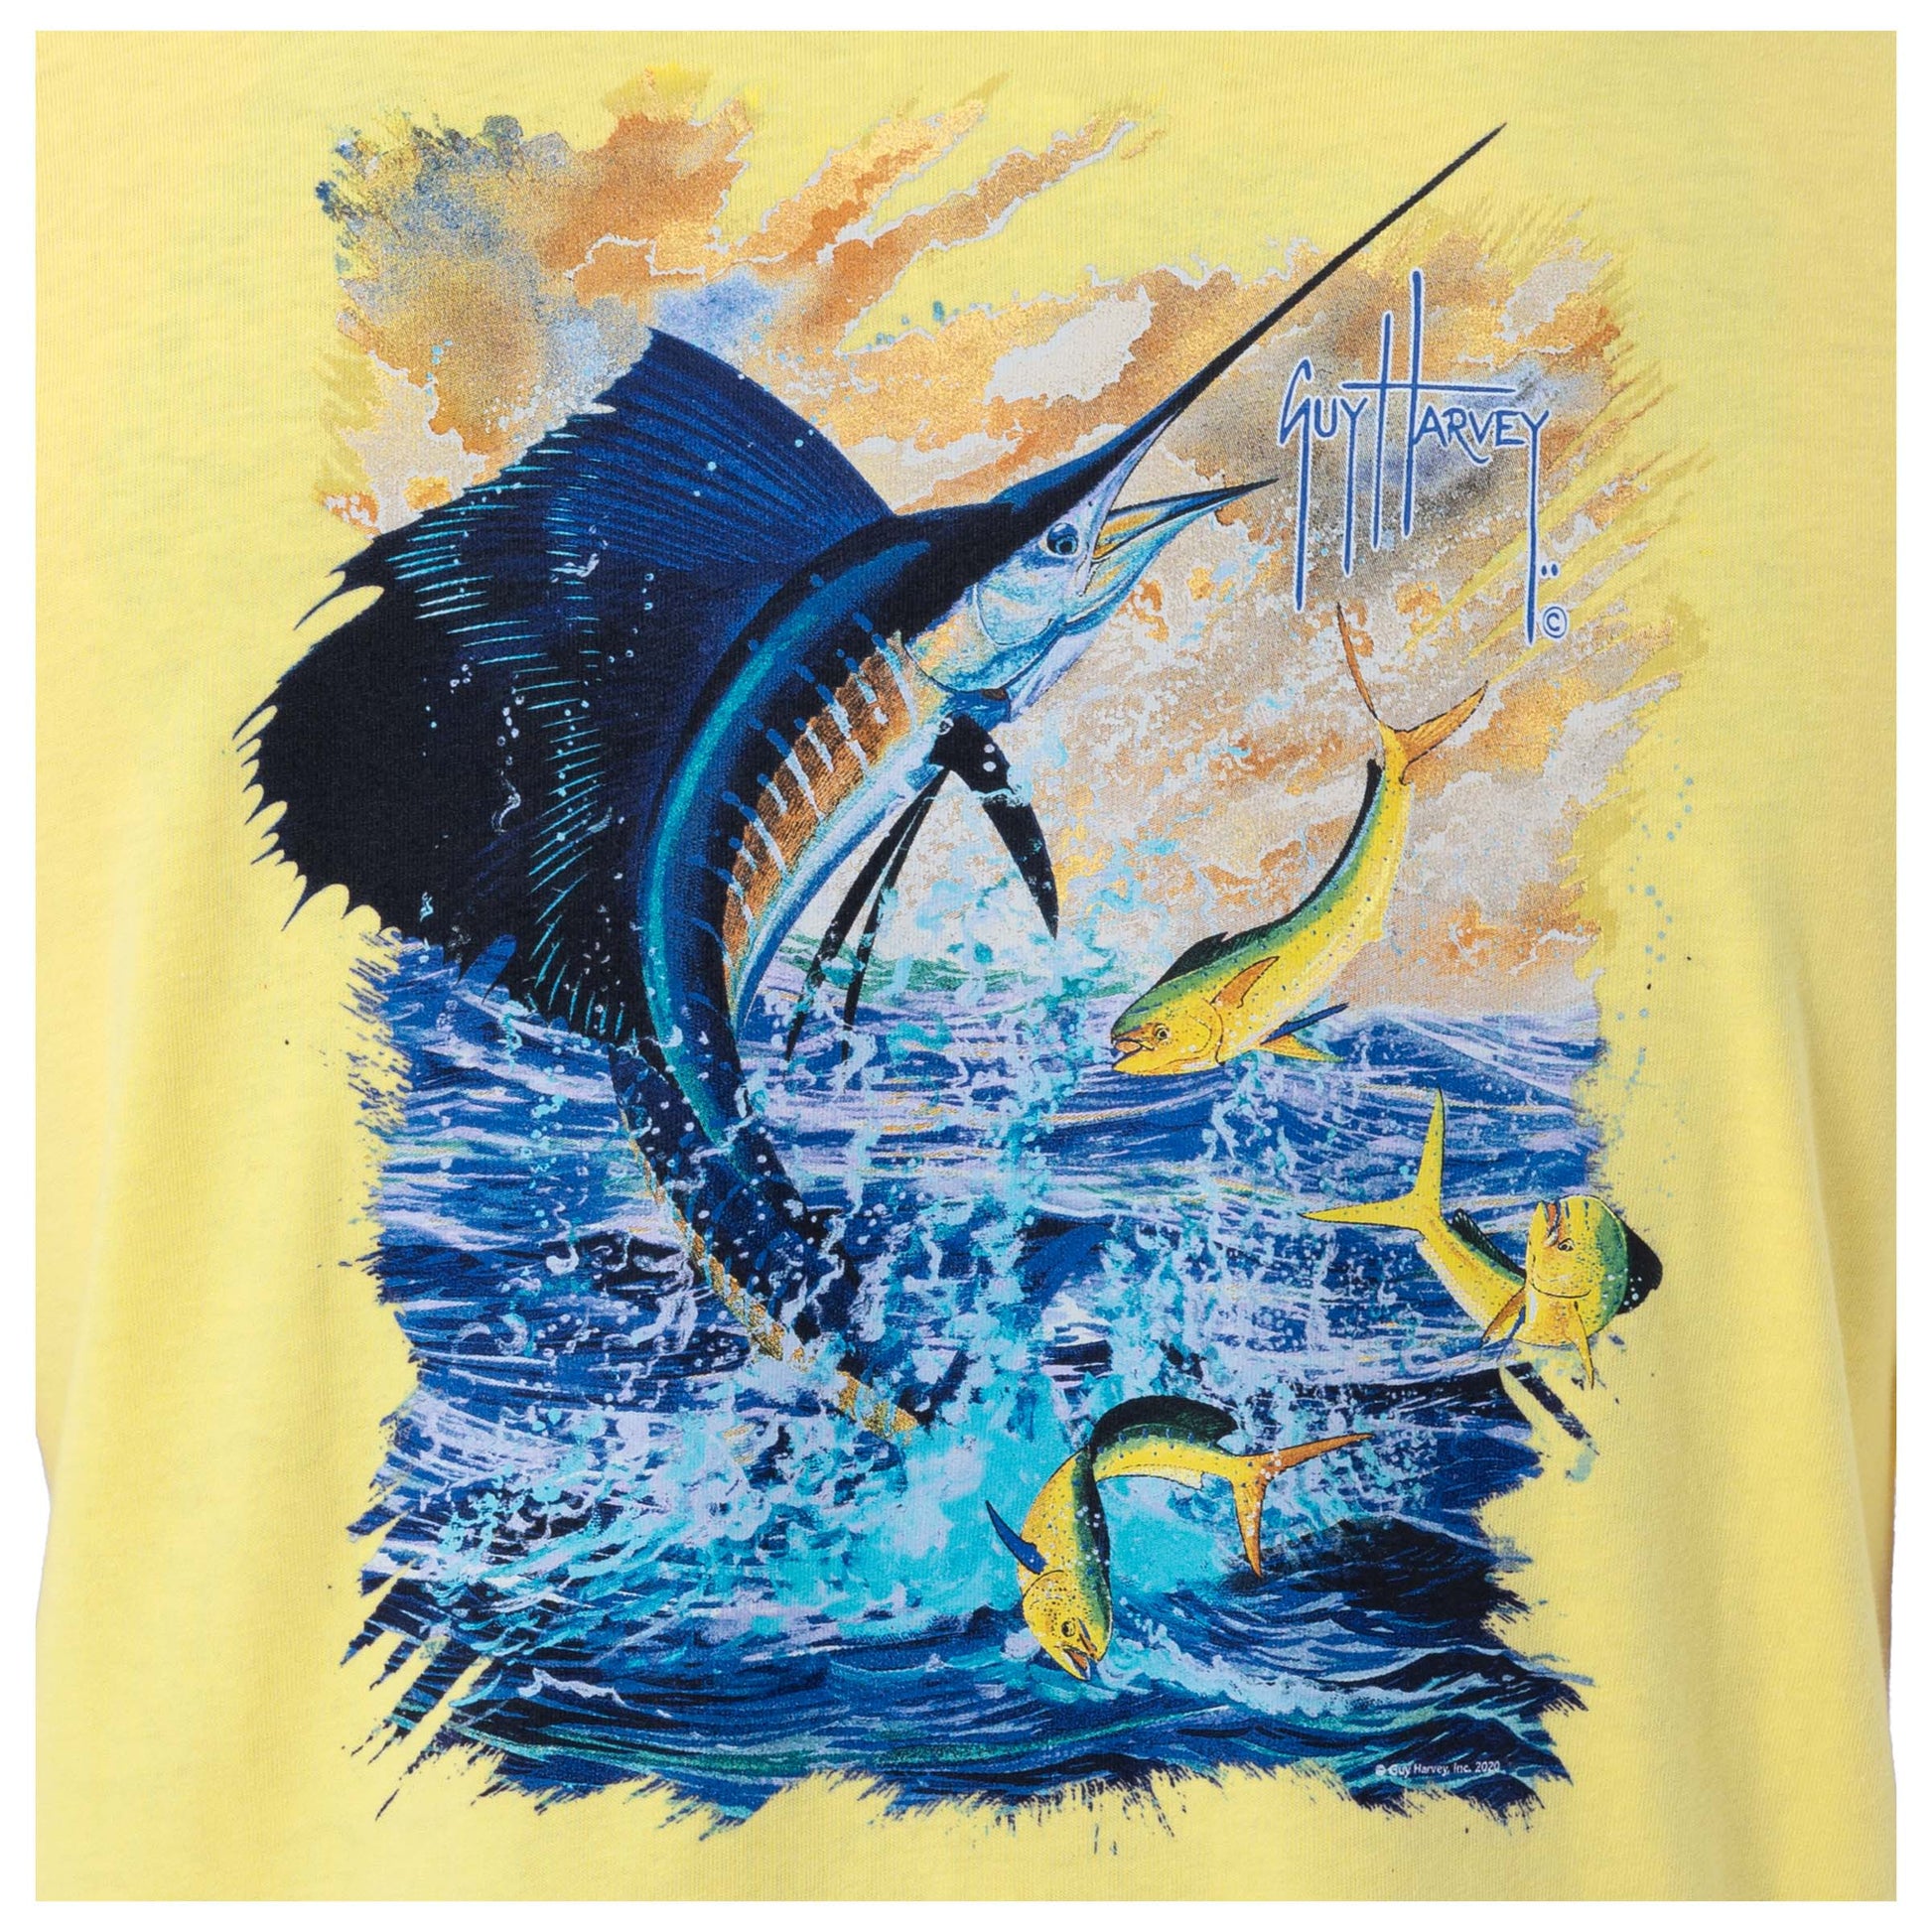 Men's Big Sail Short Sleeve T-Shirt